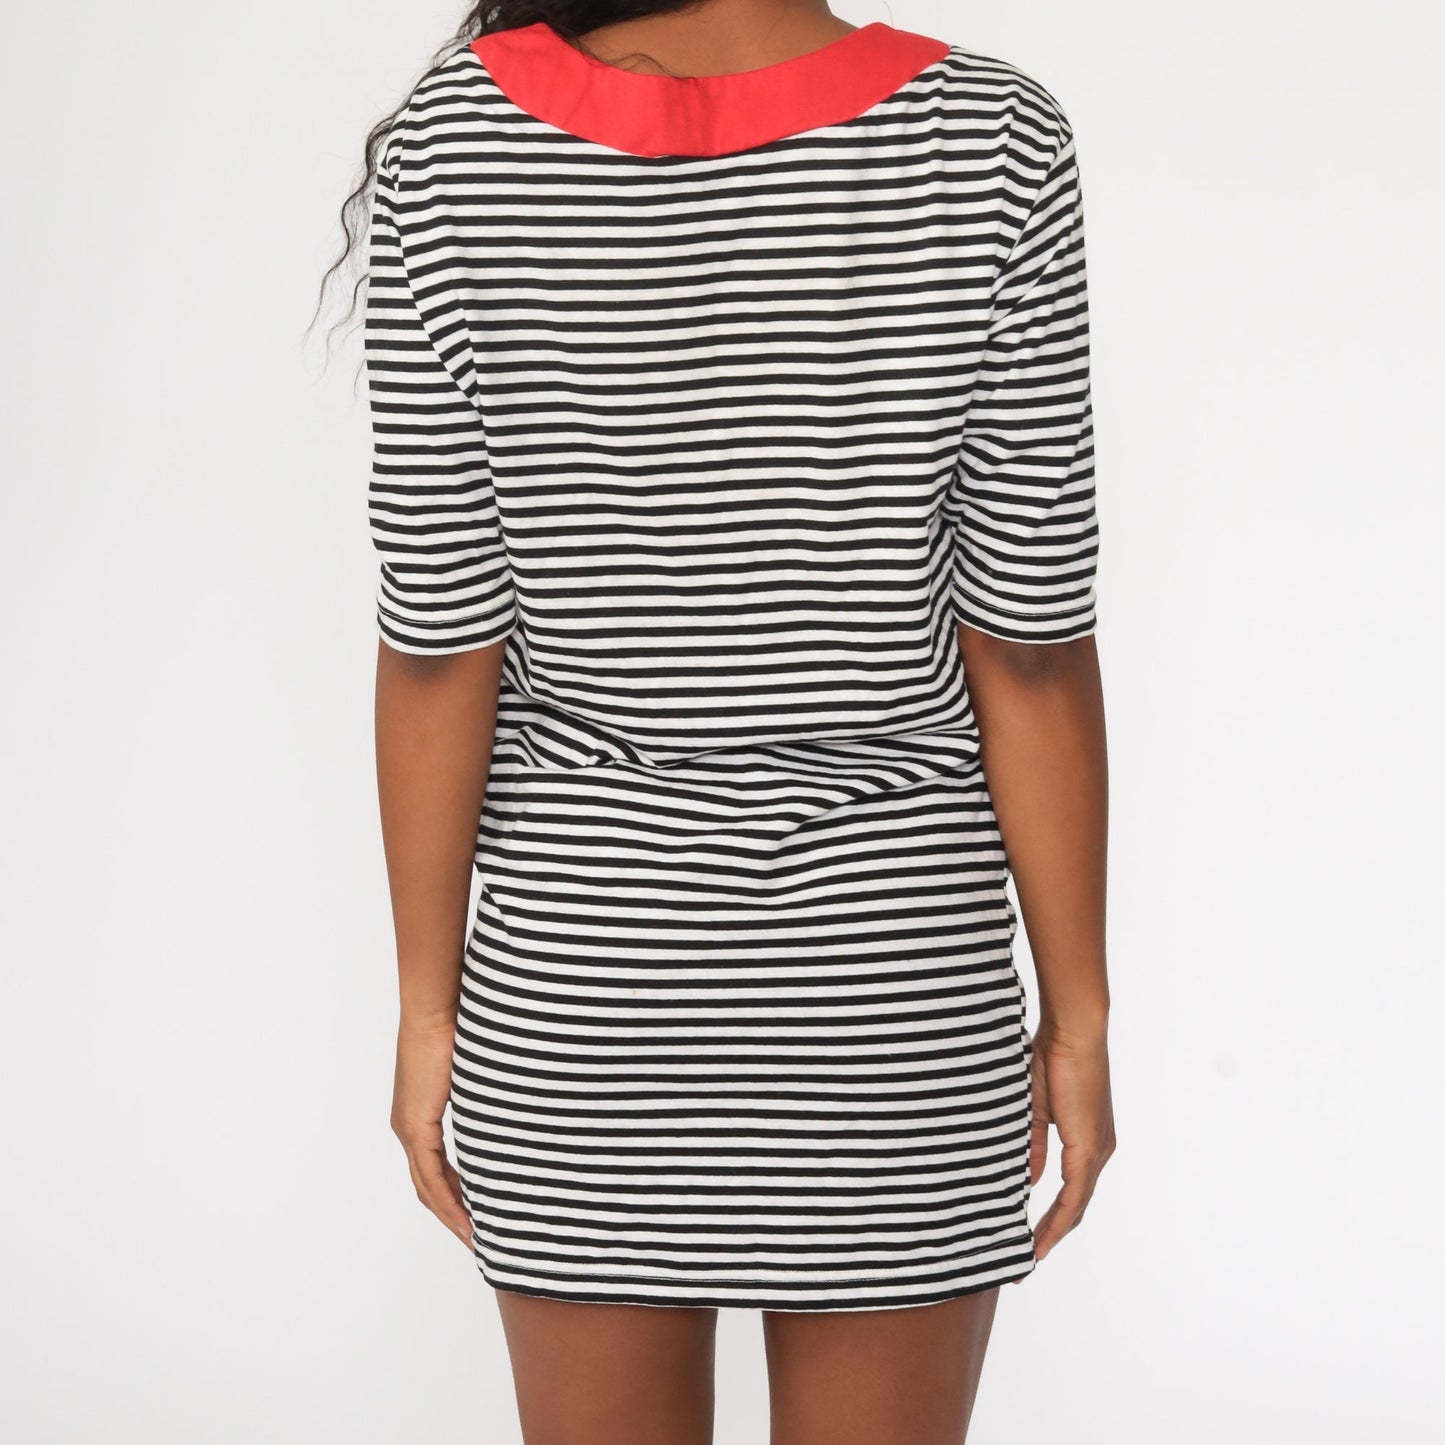 Black White Striped Dress 80s Mini Dress Red Trim Pocket 1980s Retro Long Sleeve Minidress Ringer Shift Medium